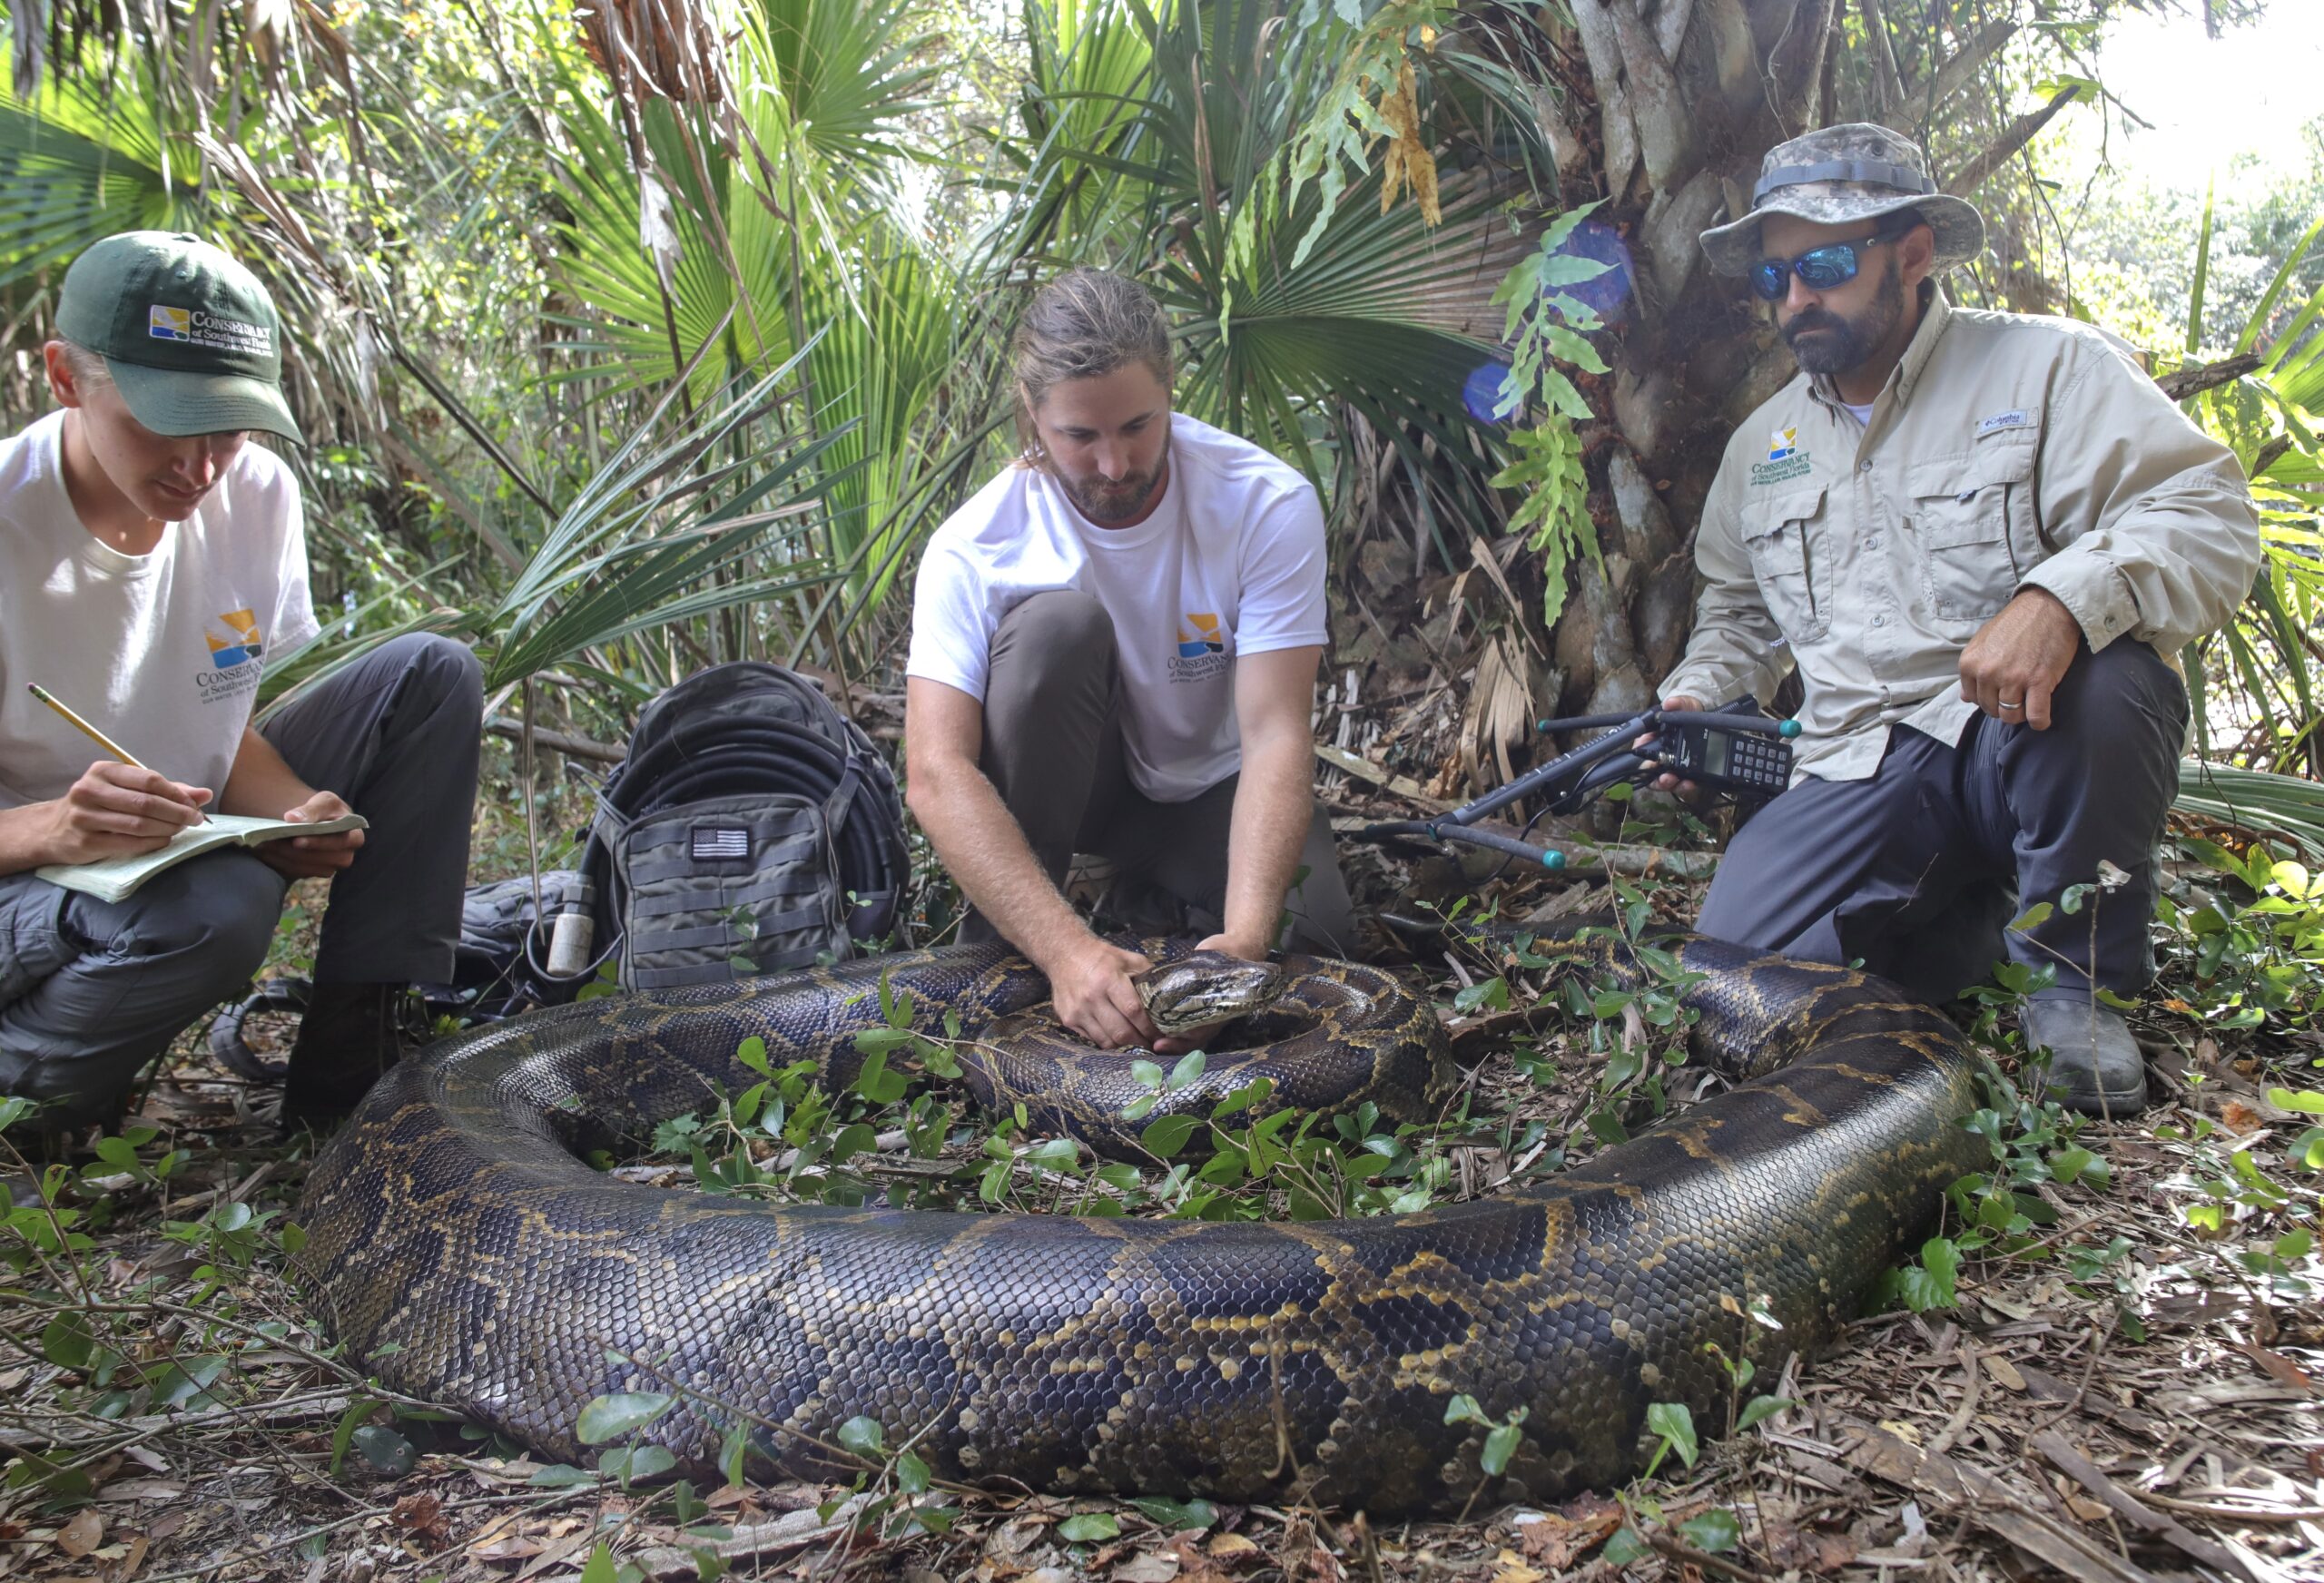 The biggest python ever captured in Florida.